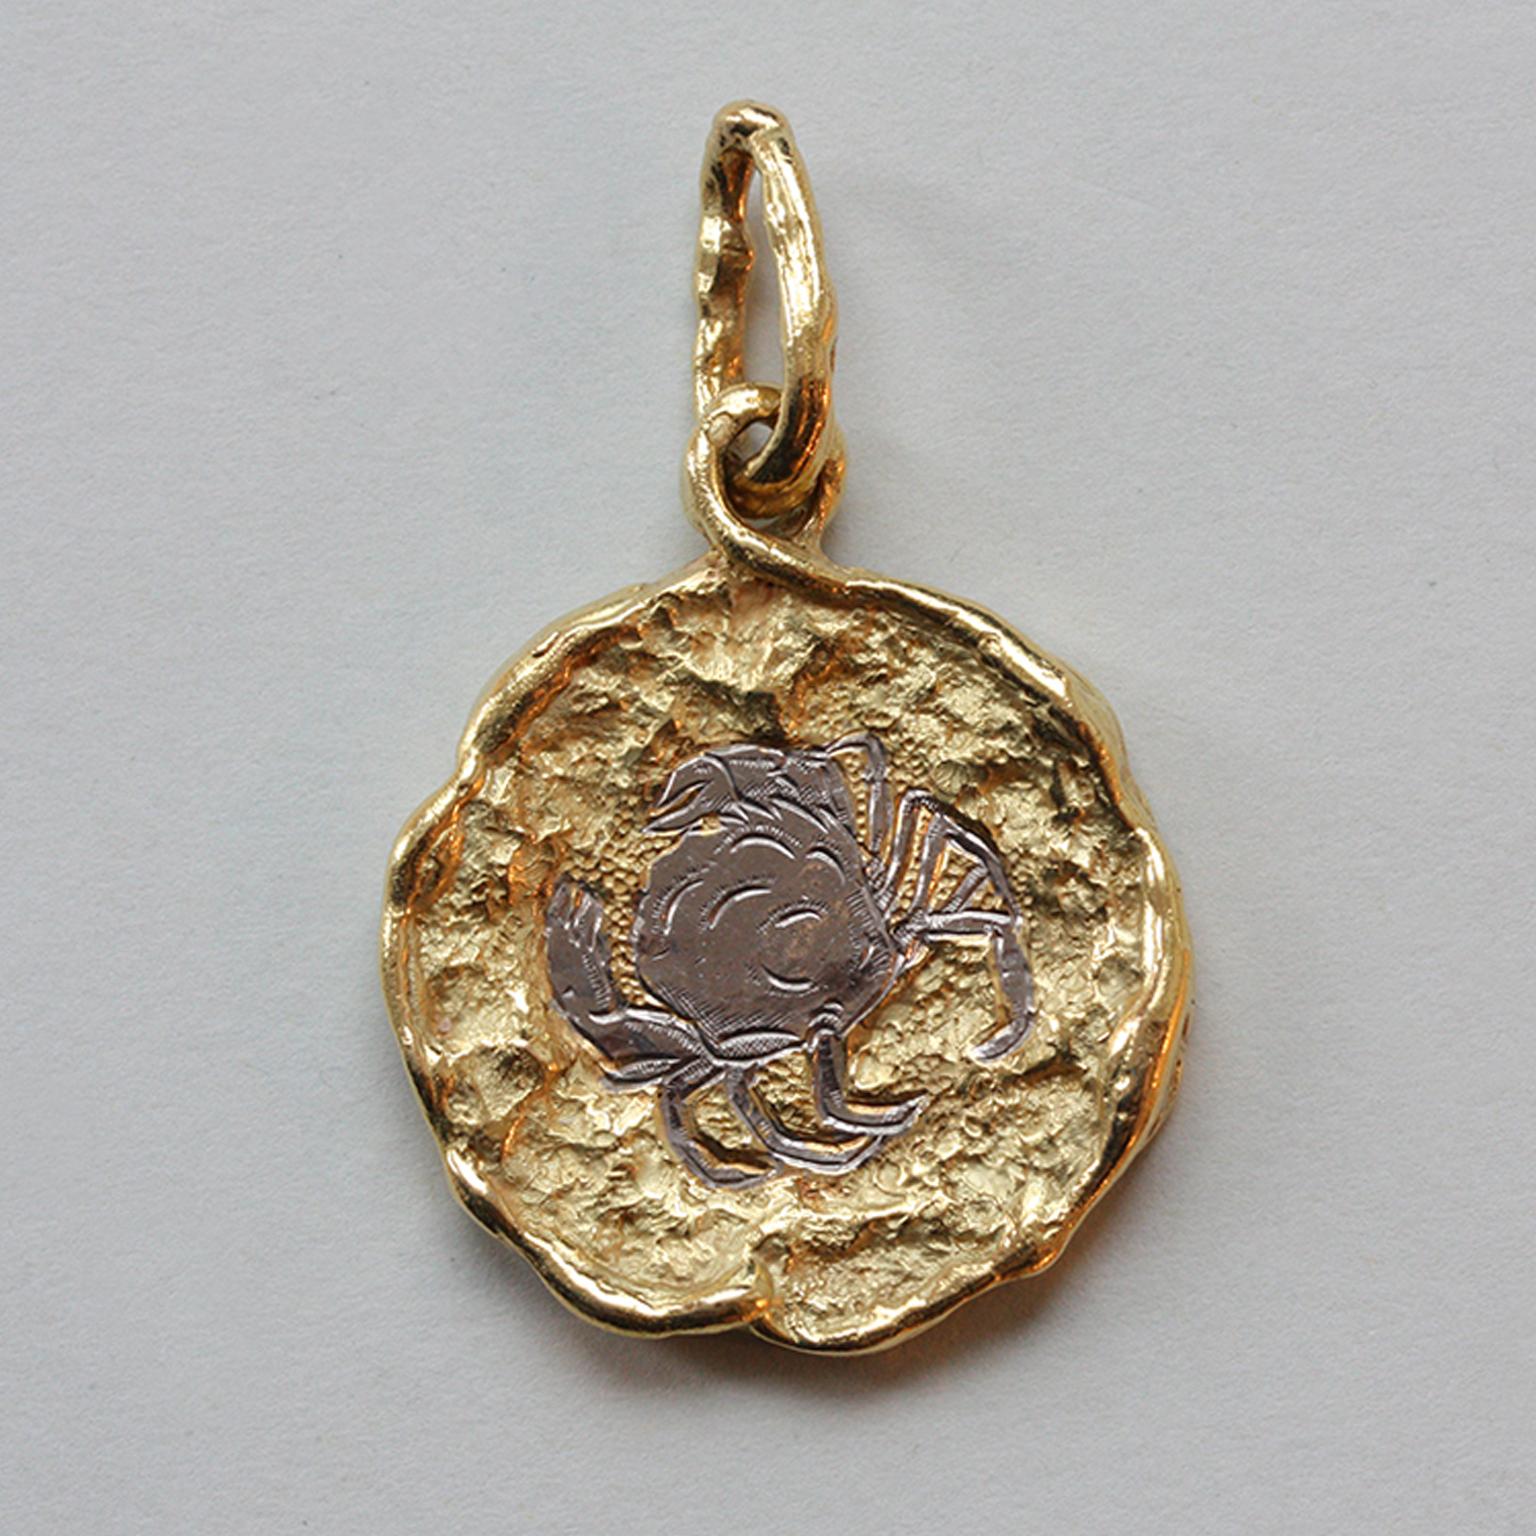 A bi-color 18 carat gold brutalist textured Cancer pendant, signed: Chaumet, Paris, France, circa 1970.

weight: 31.3 grams
dimensions pendant: 4.5 x 3 cm